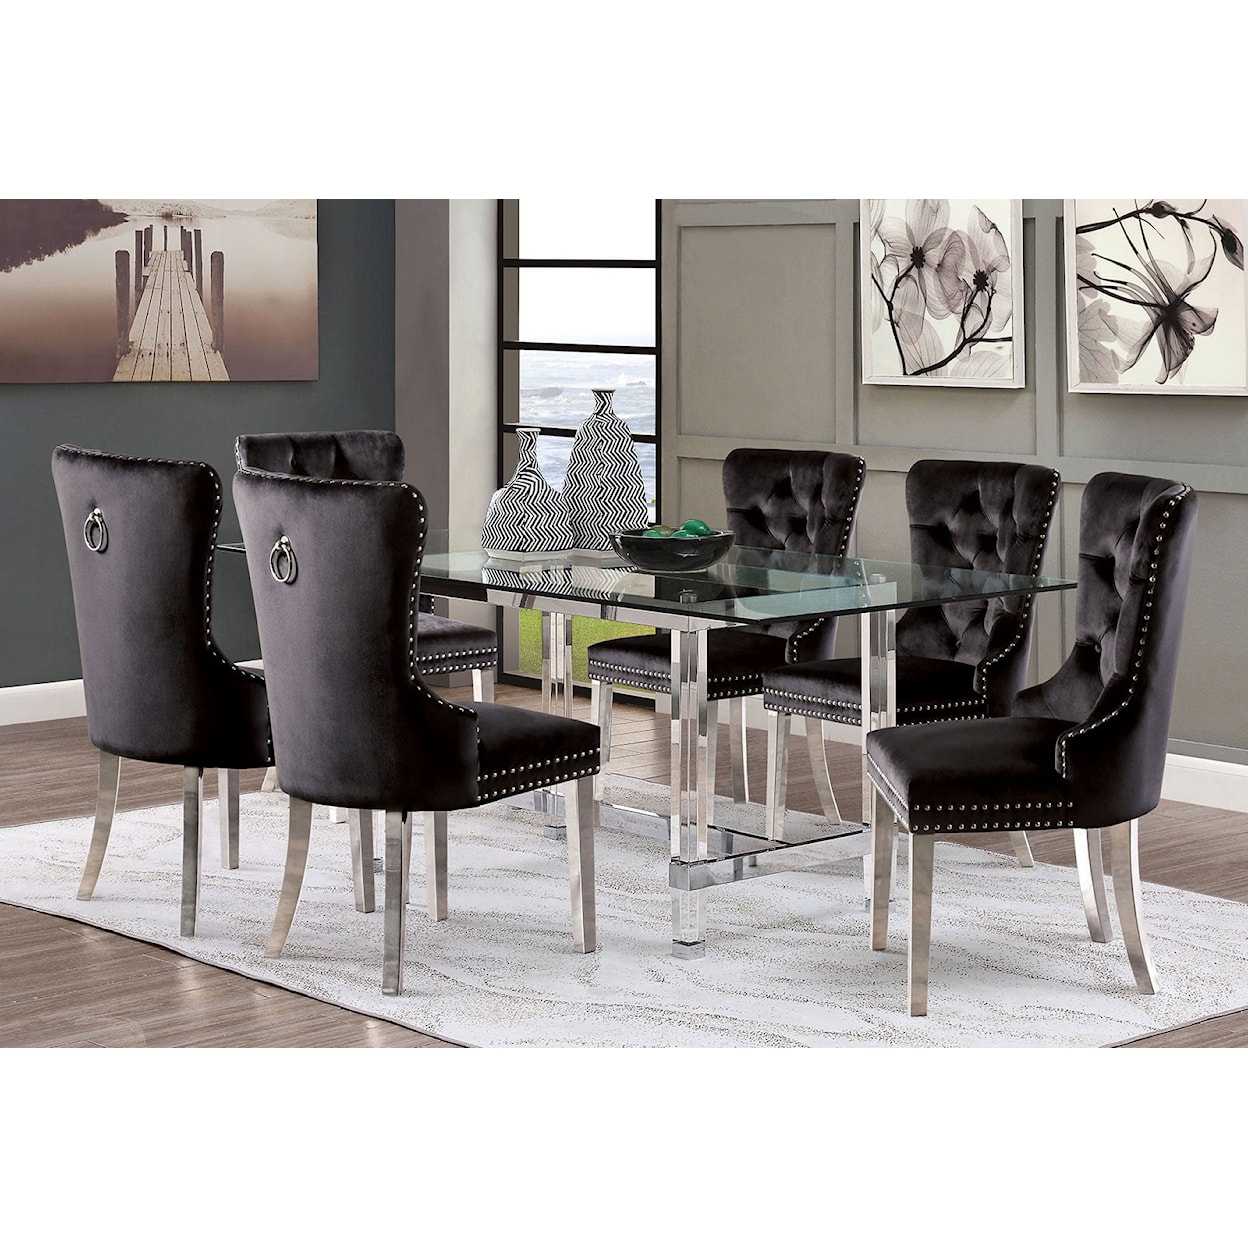 Furniture of America Casper 7 Pc. Dining Table Set, Black Chairs